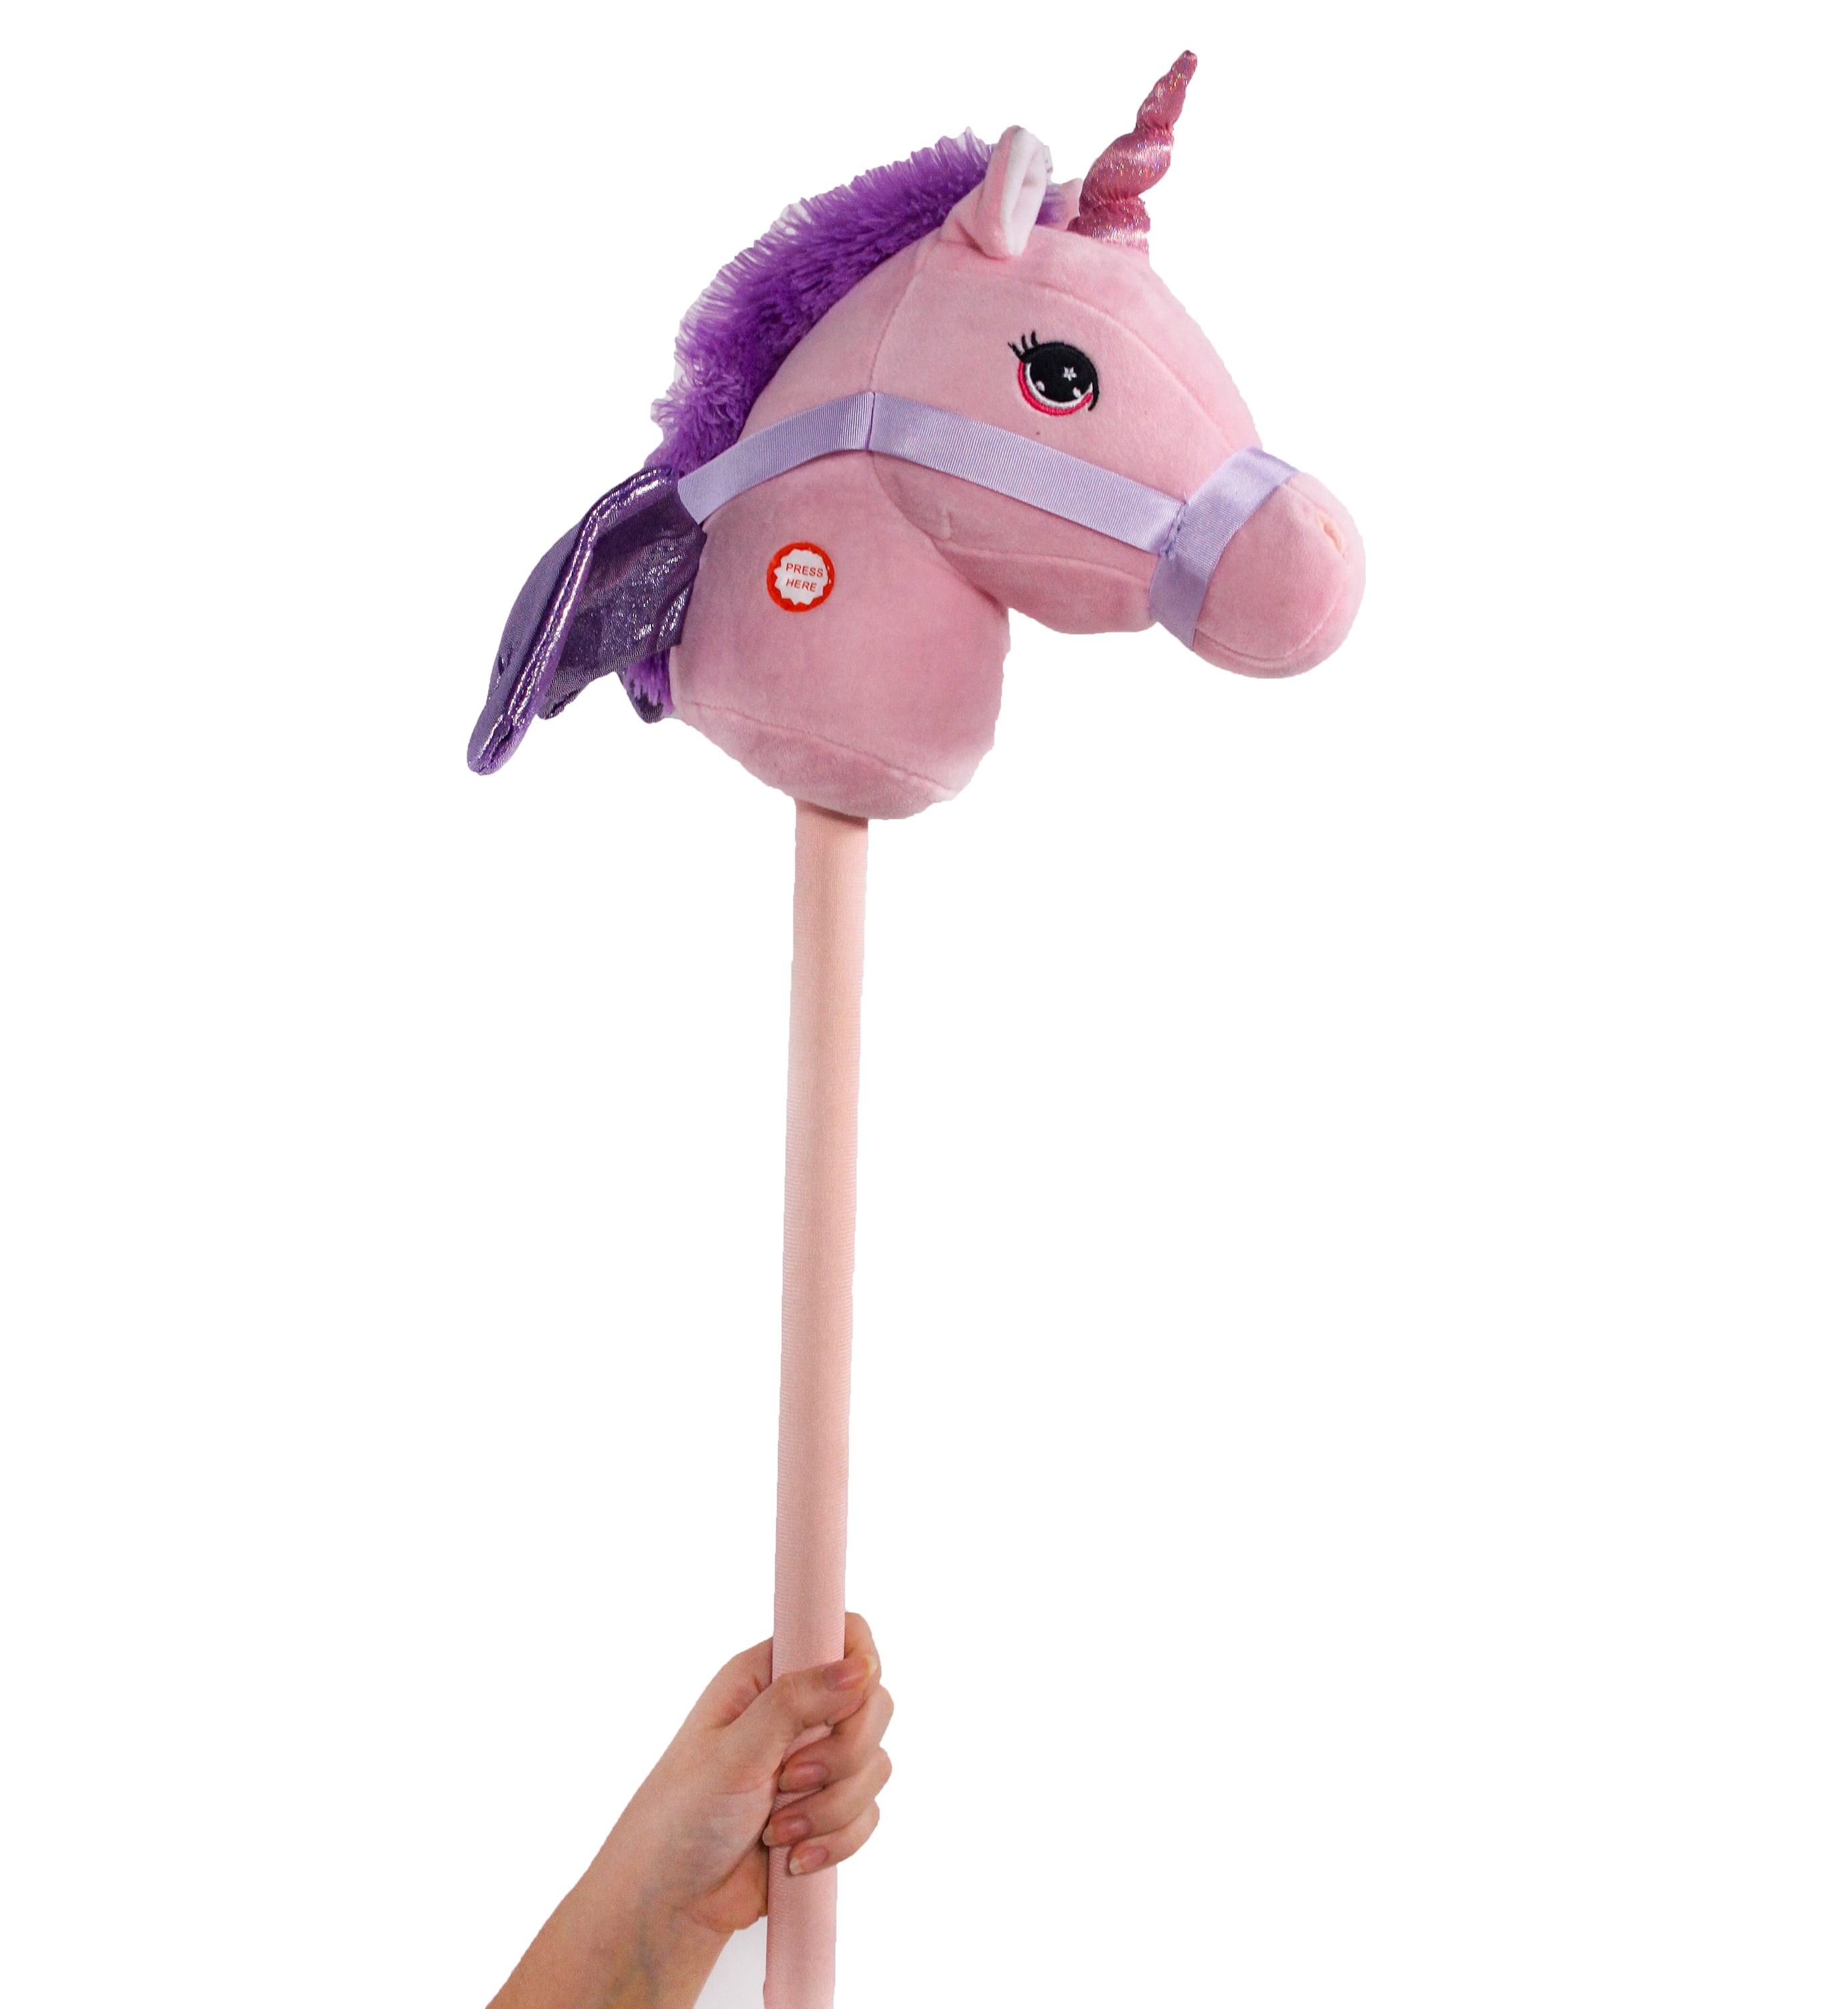 Giddy Up Stick White Unicorn With Sound 39" Stuffed Animal Toy Doll Play Plush 